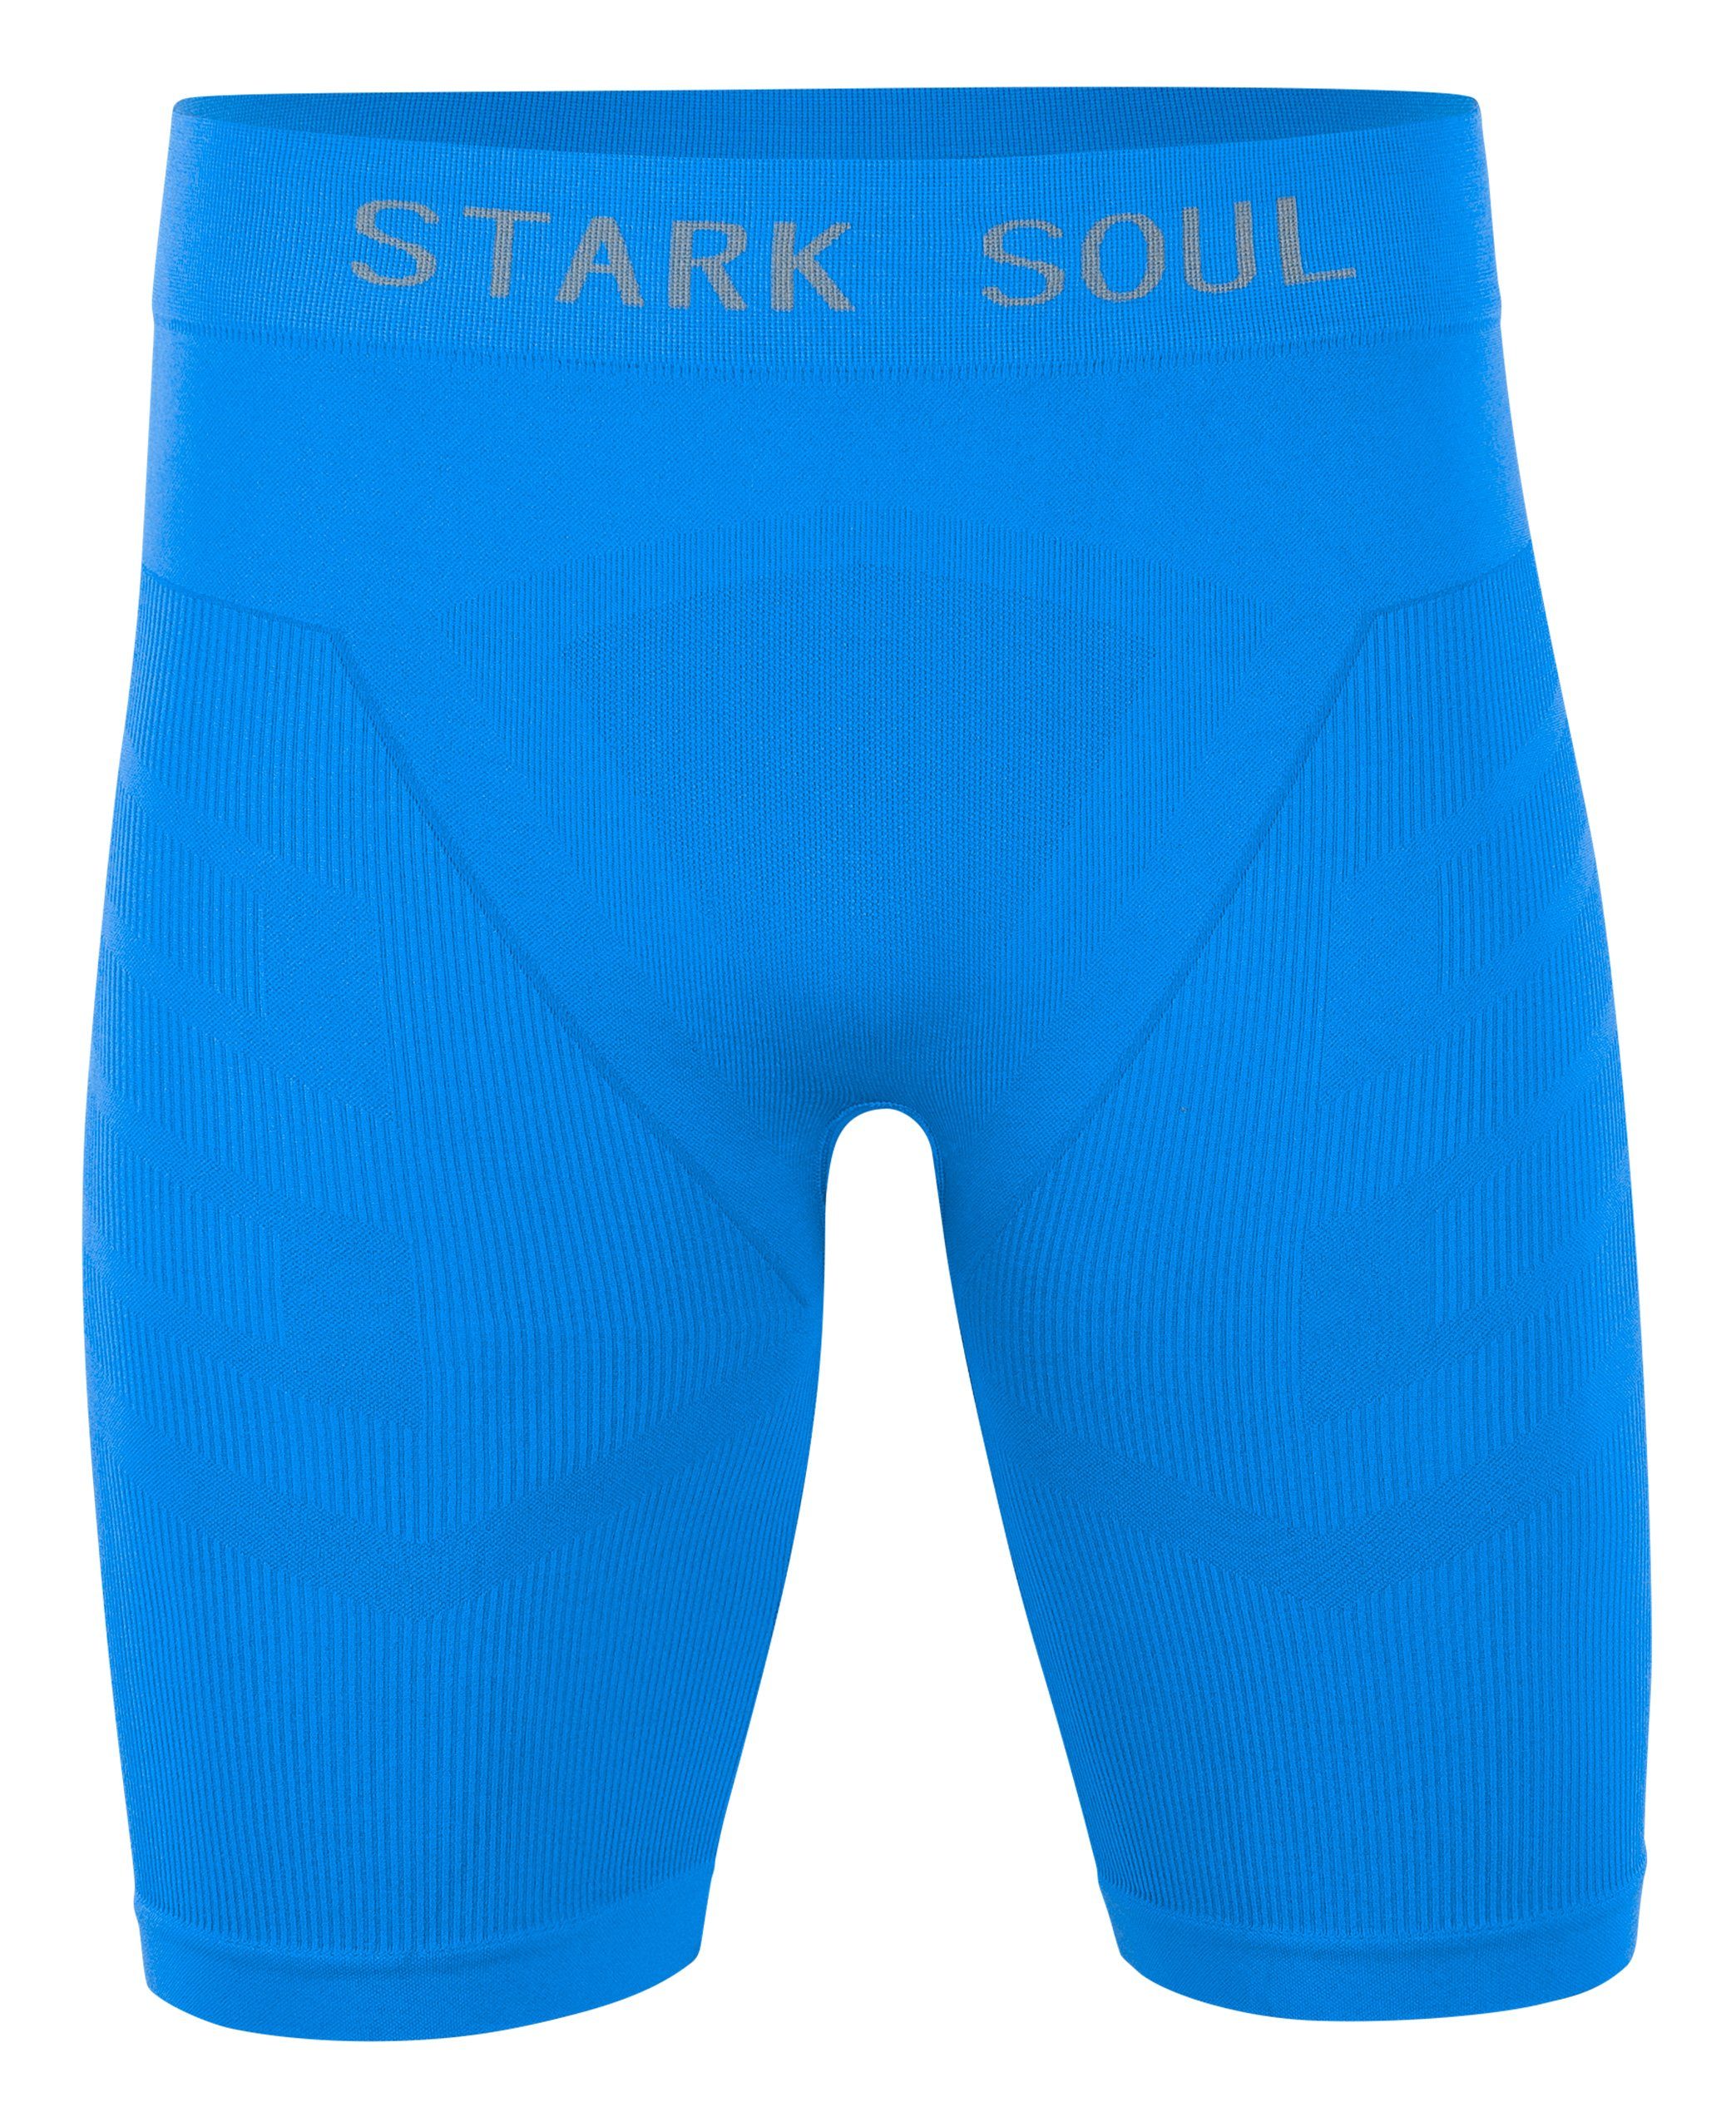 Stark Soul® Radlerhose Kurze Unterziehtights Seamless Blau WARM - - UP